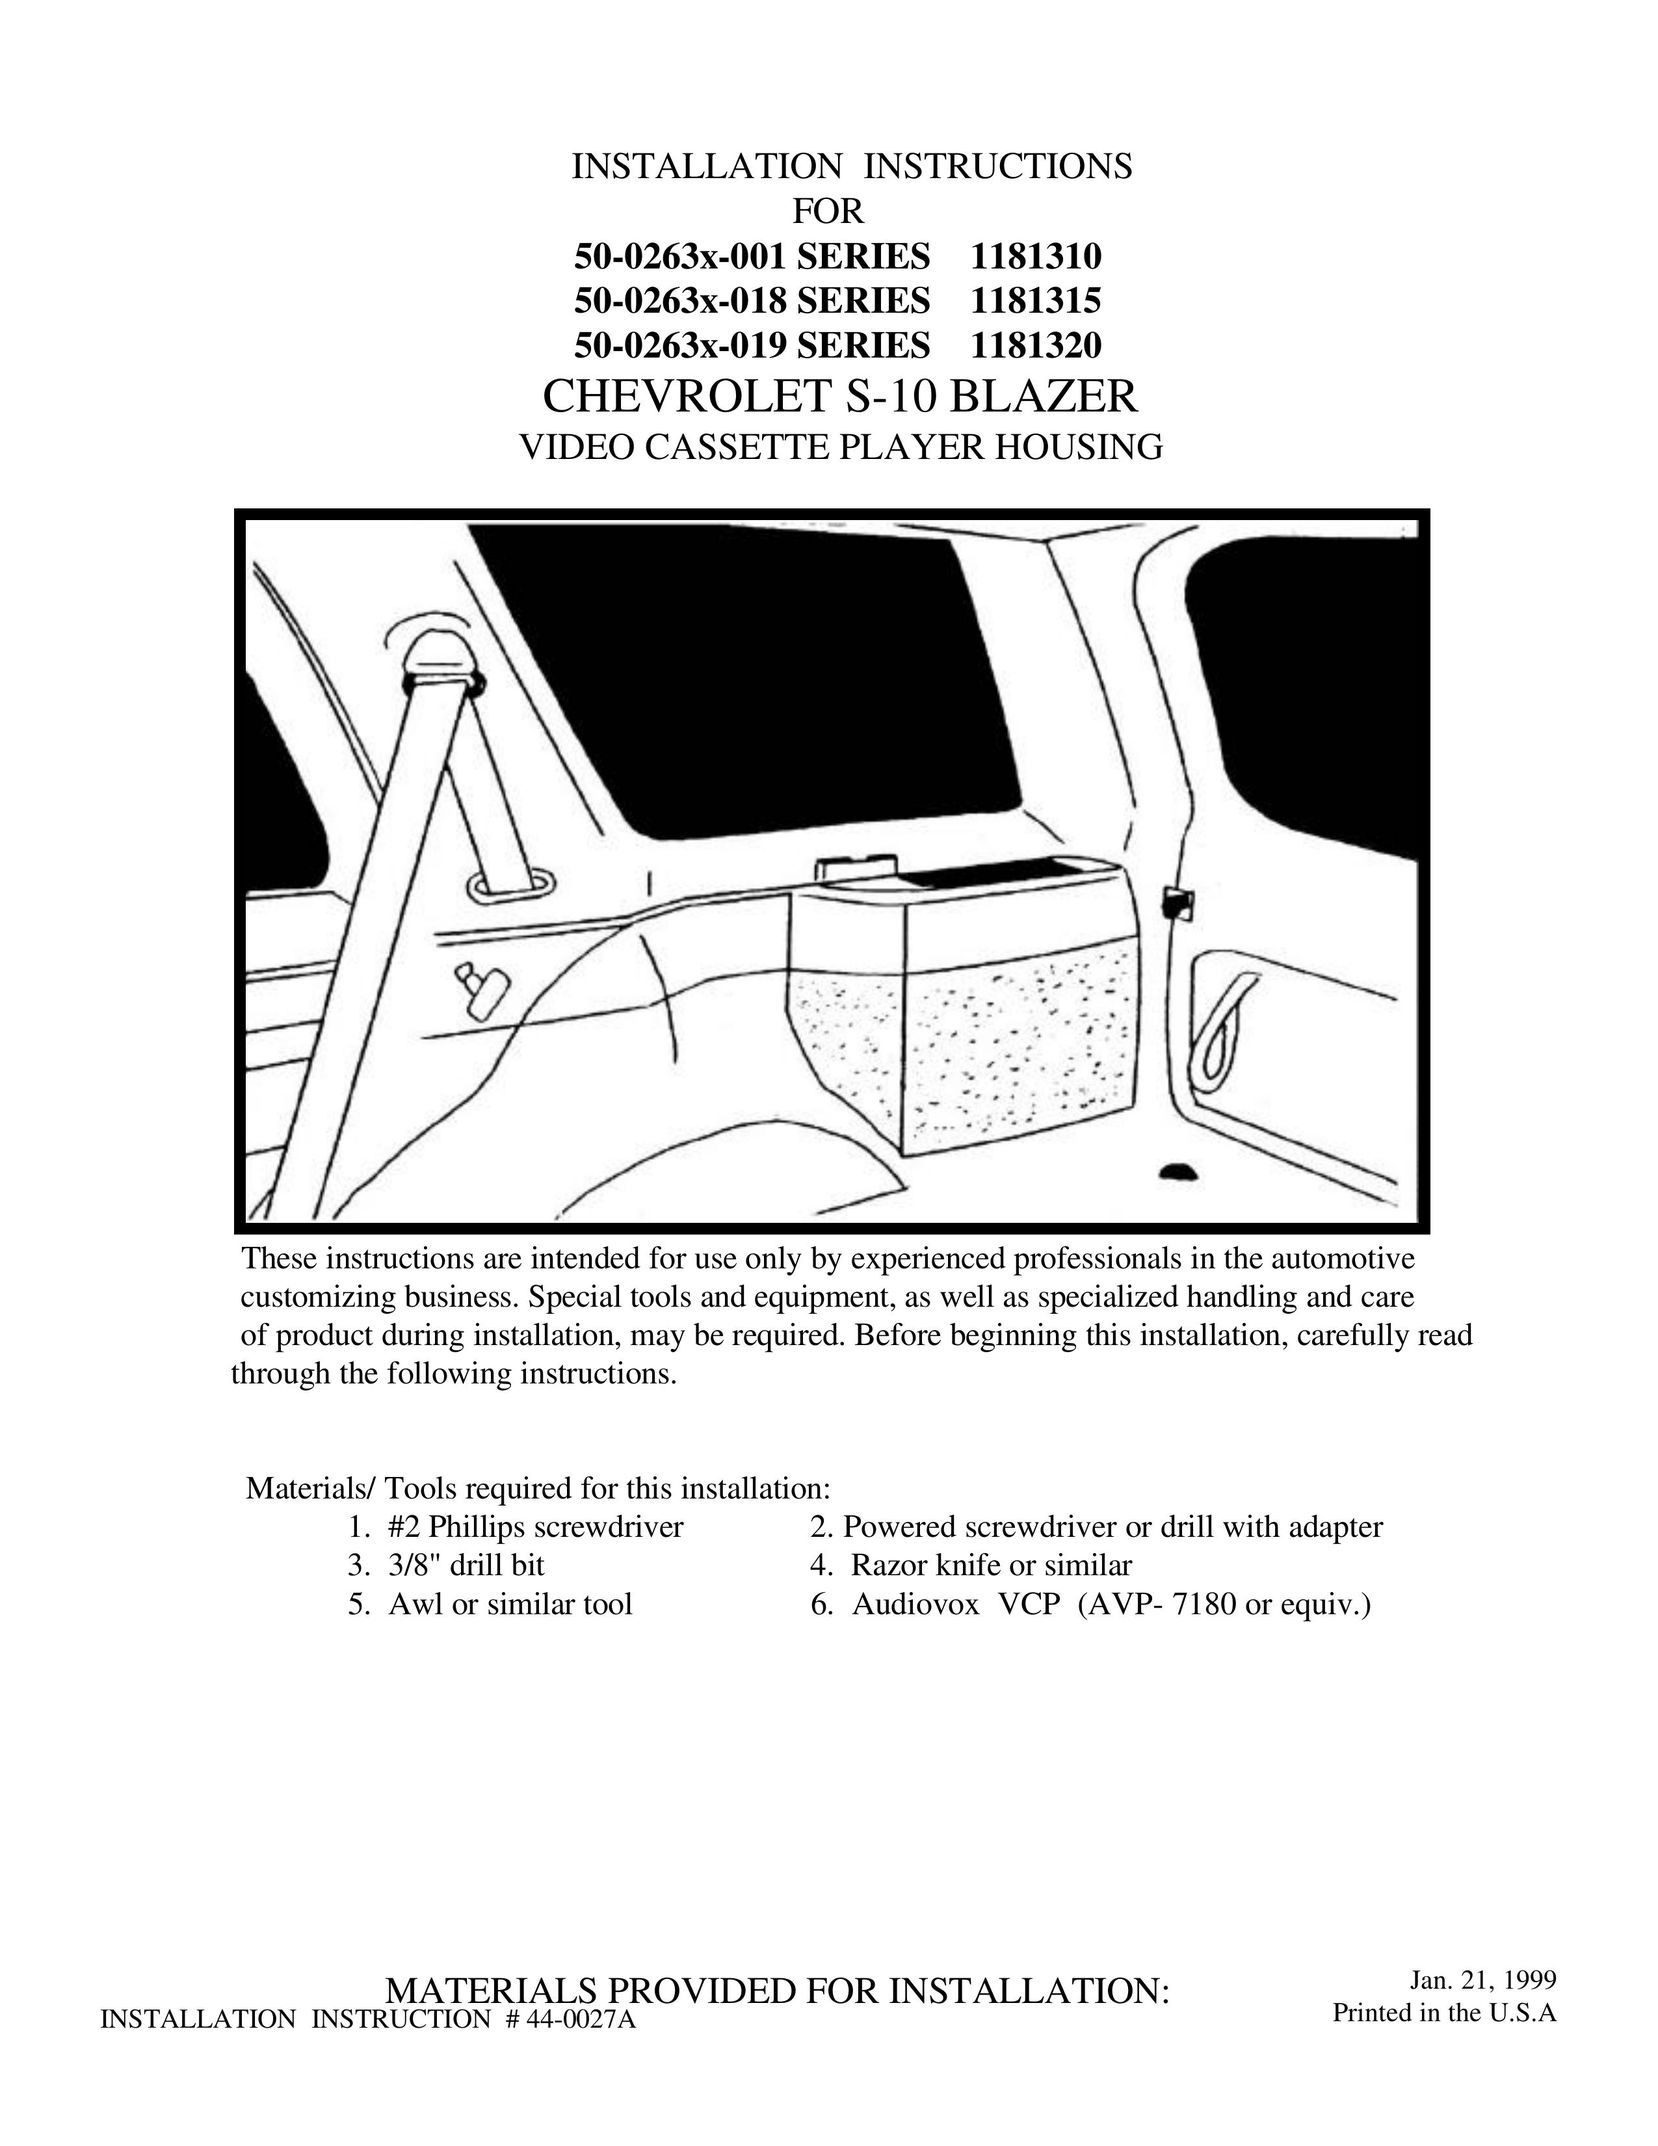 Audiovox 50-0263x-019 SERIES VCR User Manual